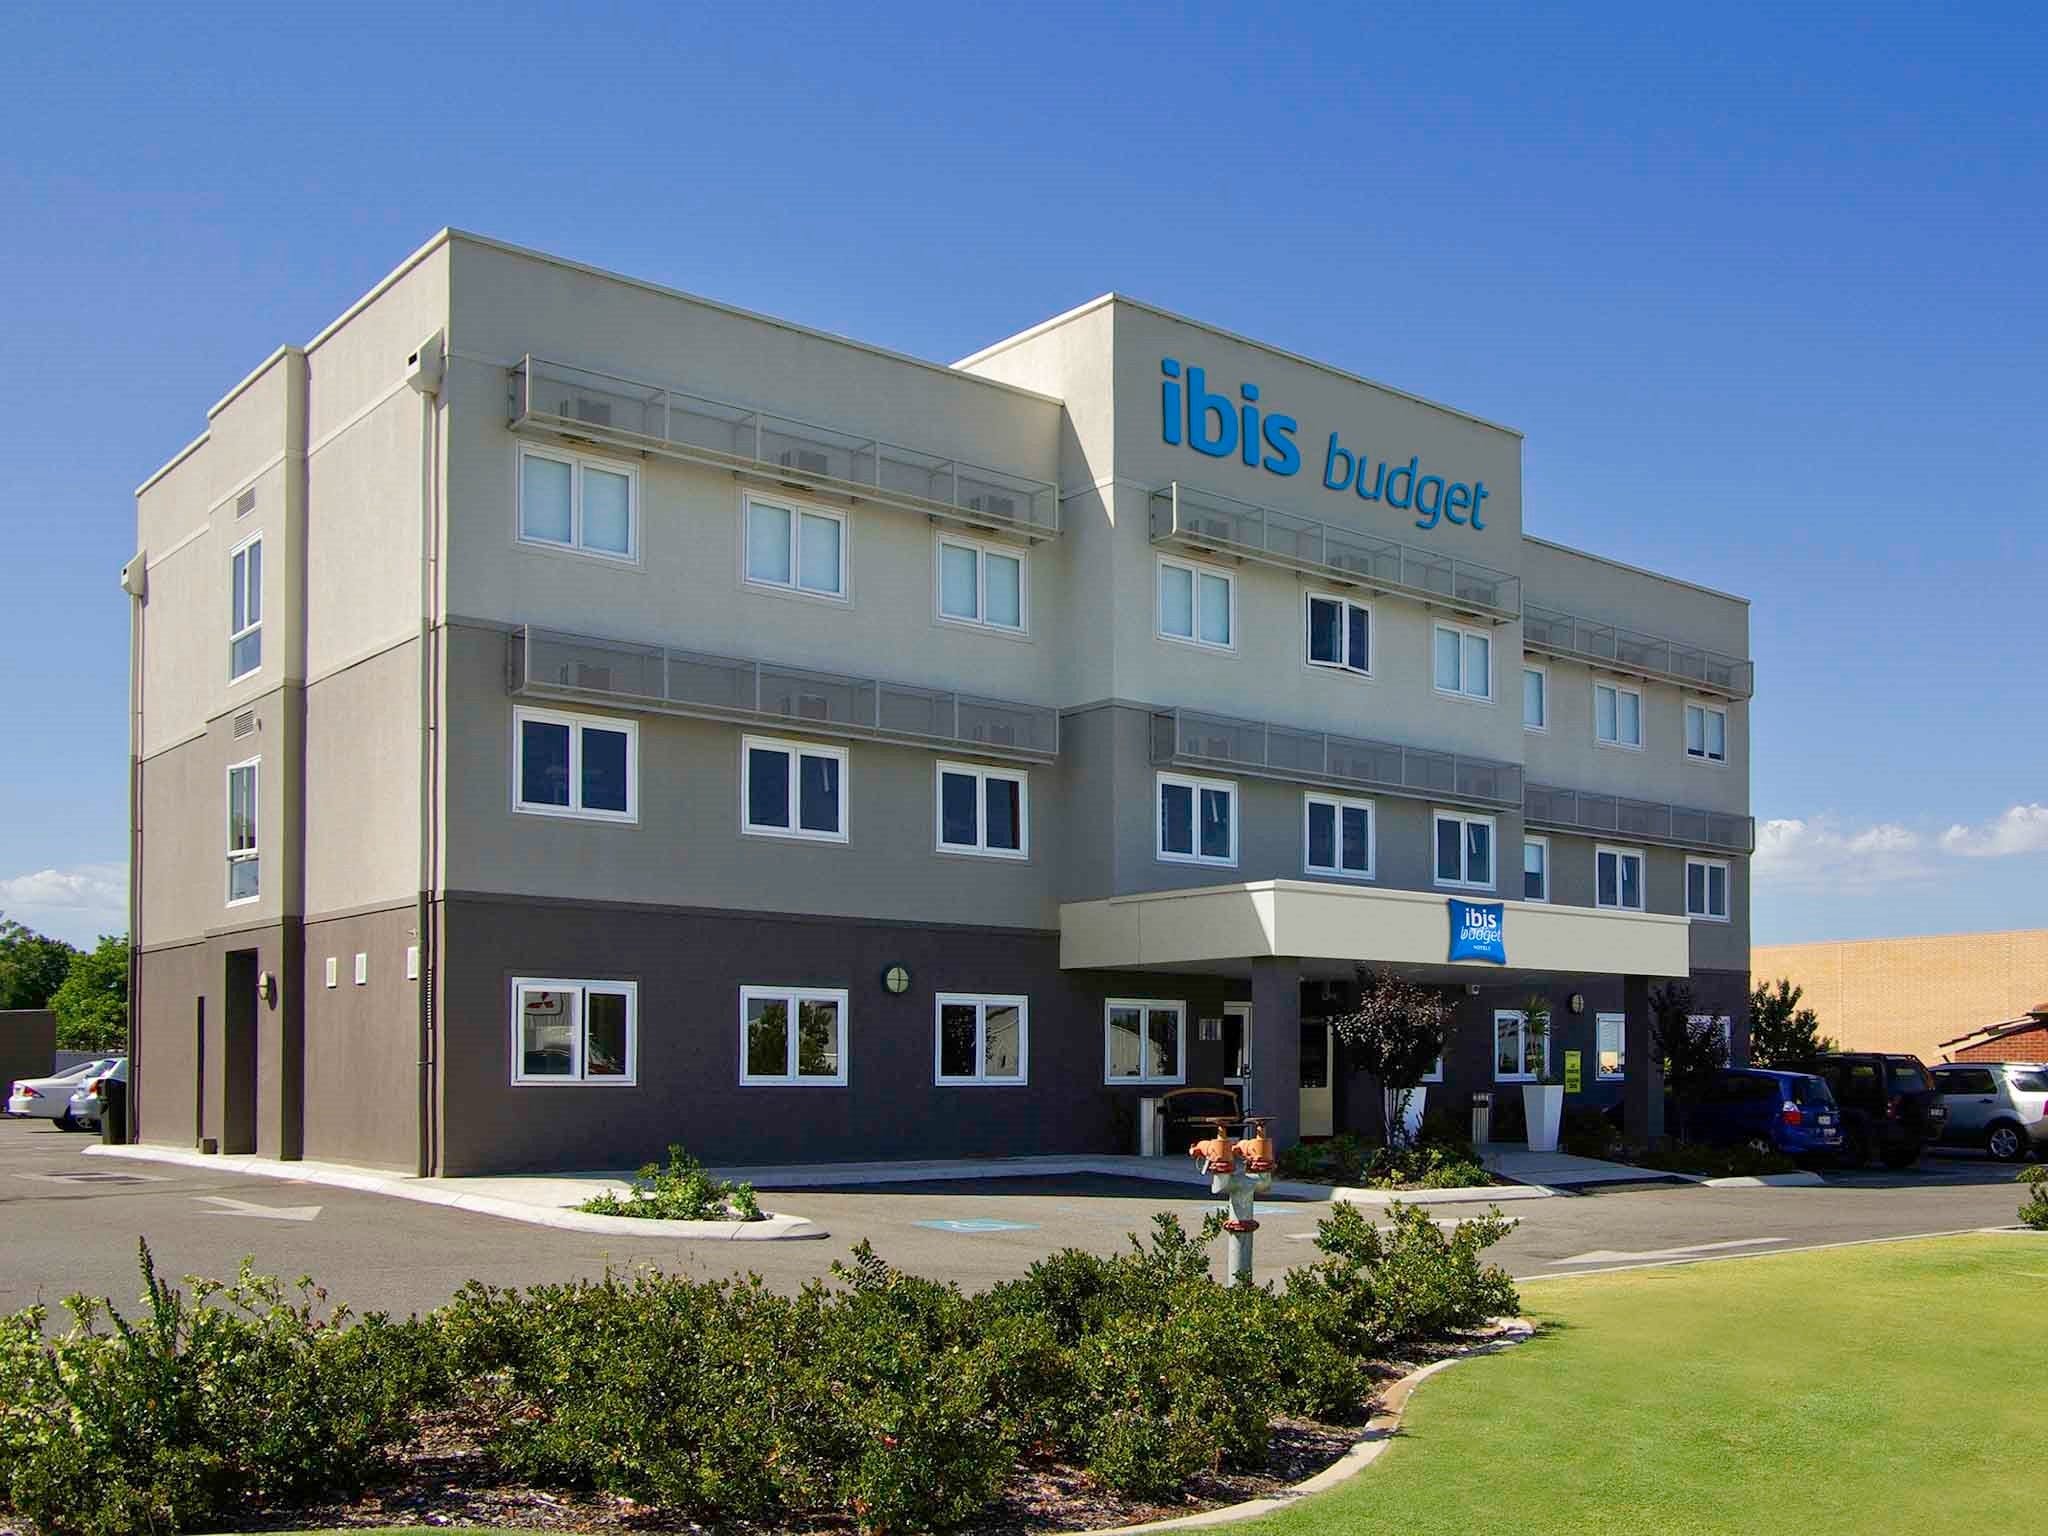 Ibis Budget - Perth Airport - Accommodation Perth